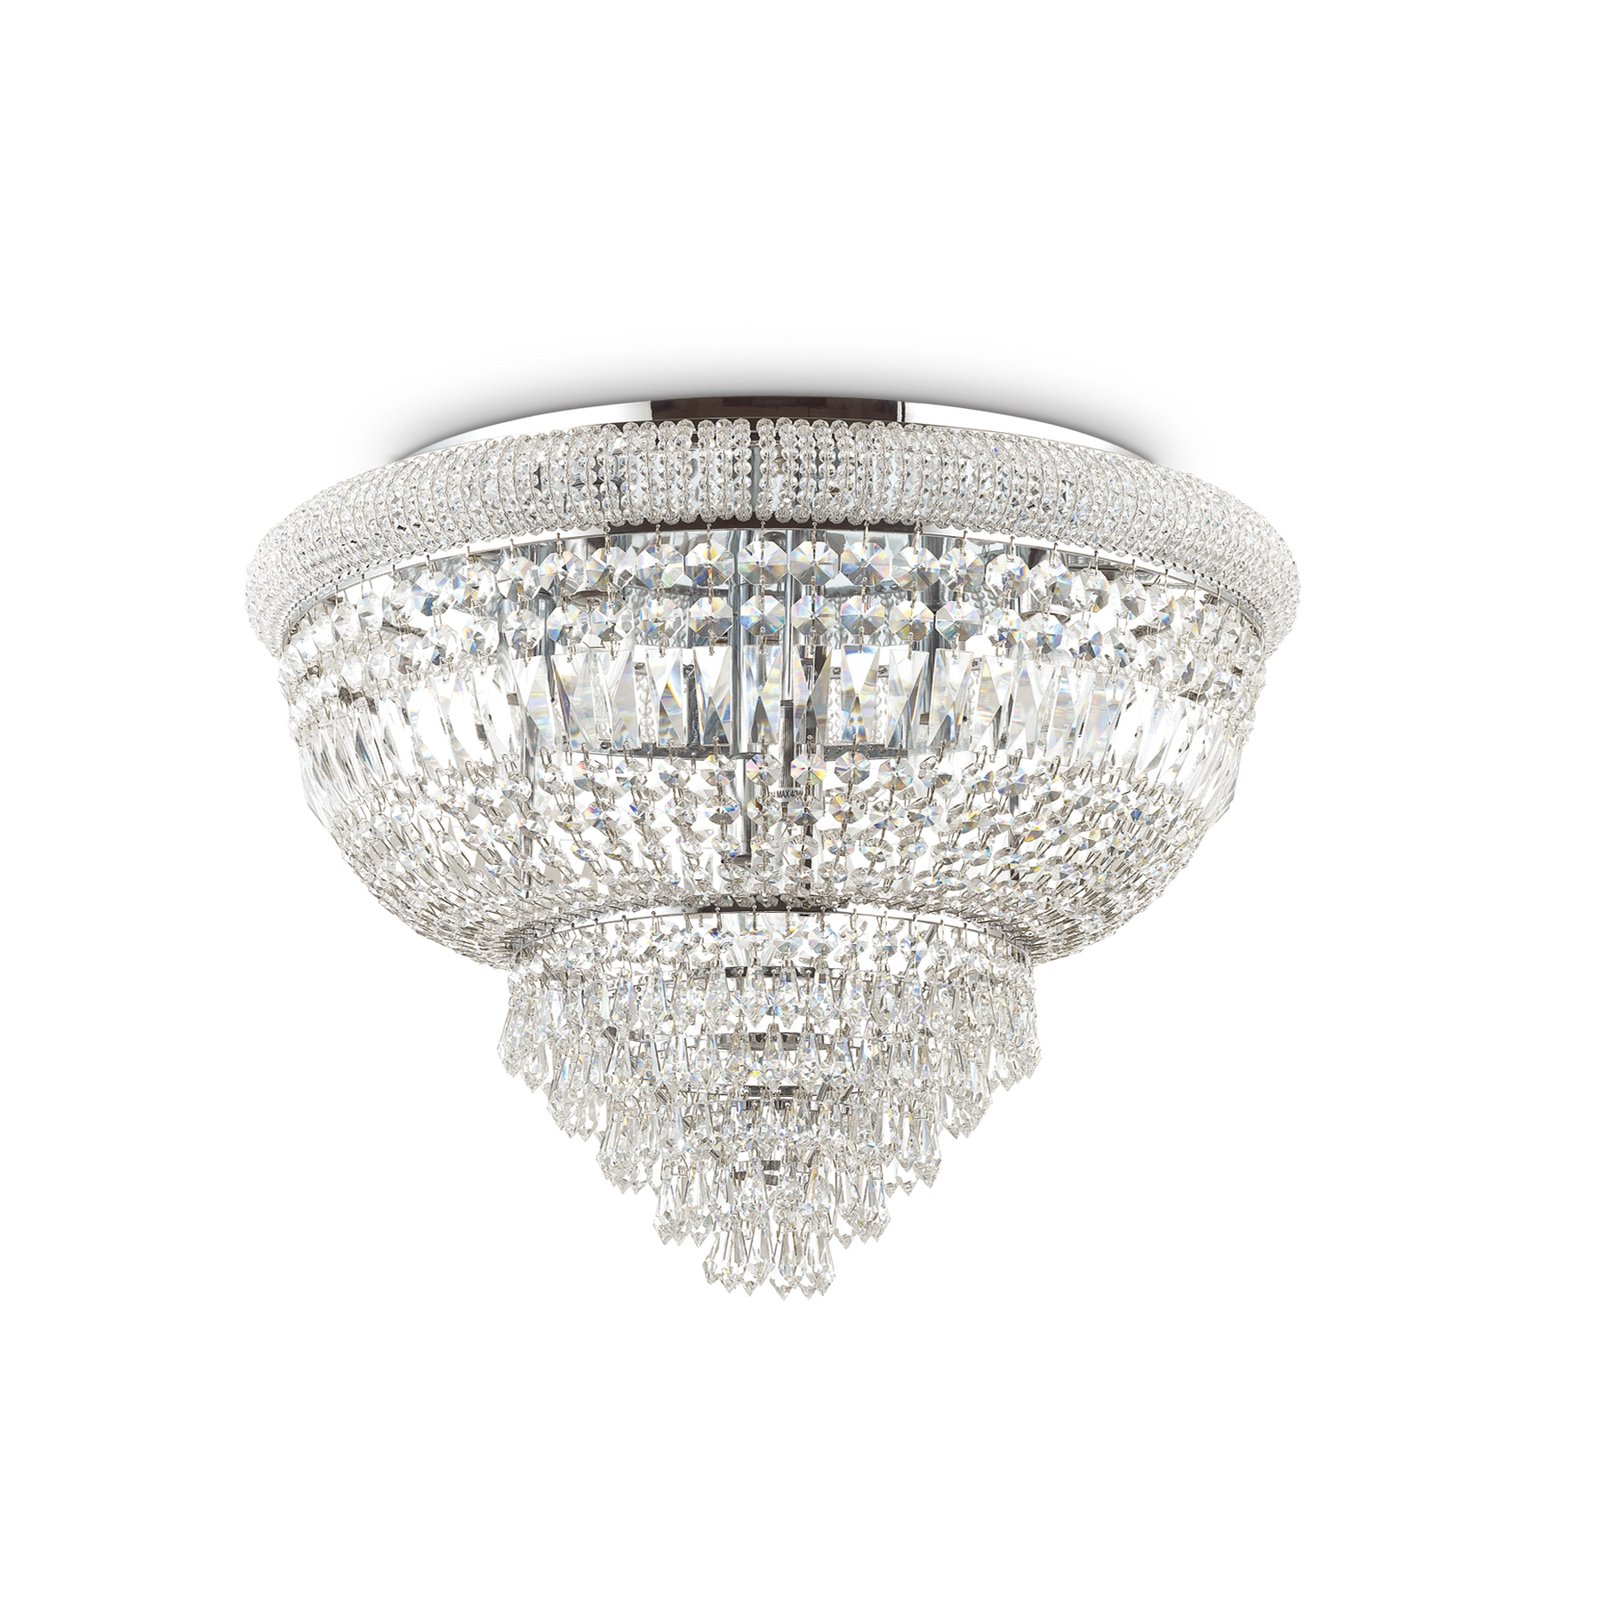 Ideal Lux plafondlamp Dubai, chroomkleurig, kristal, Ø 78 cm